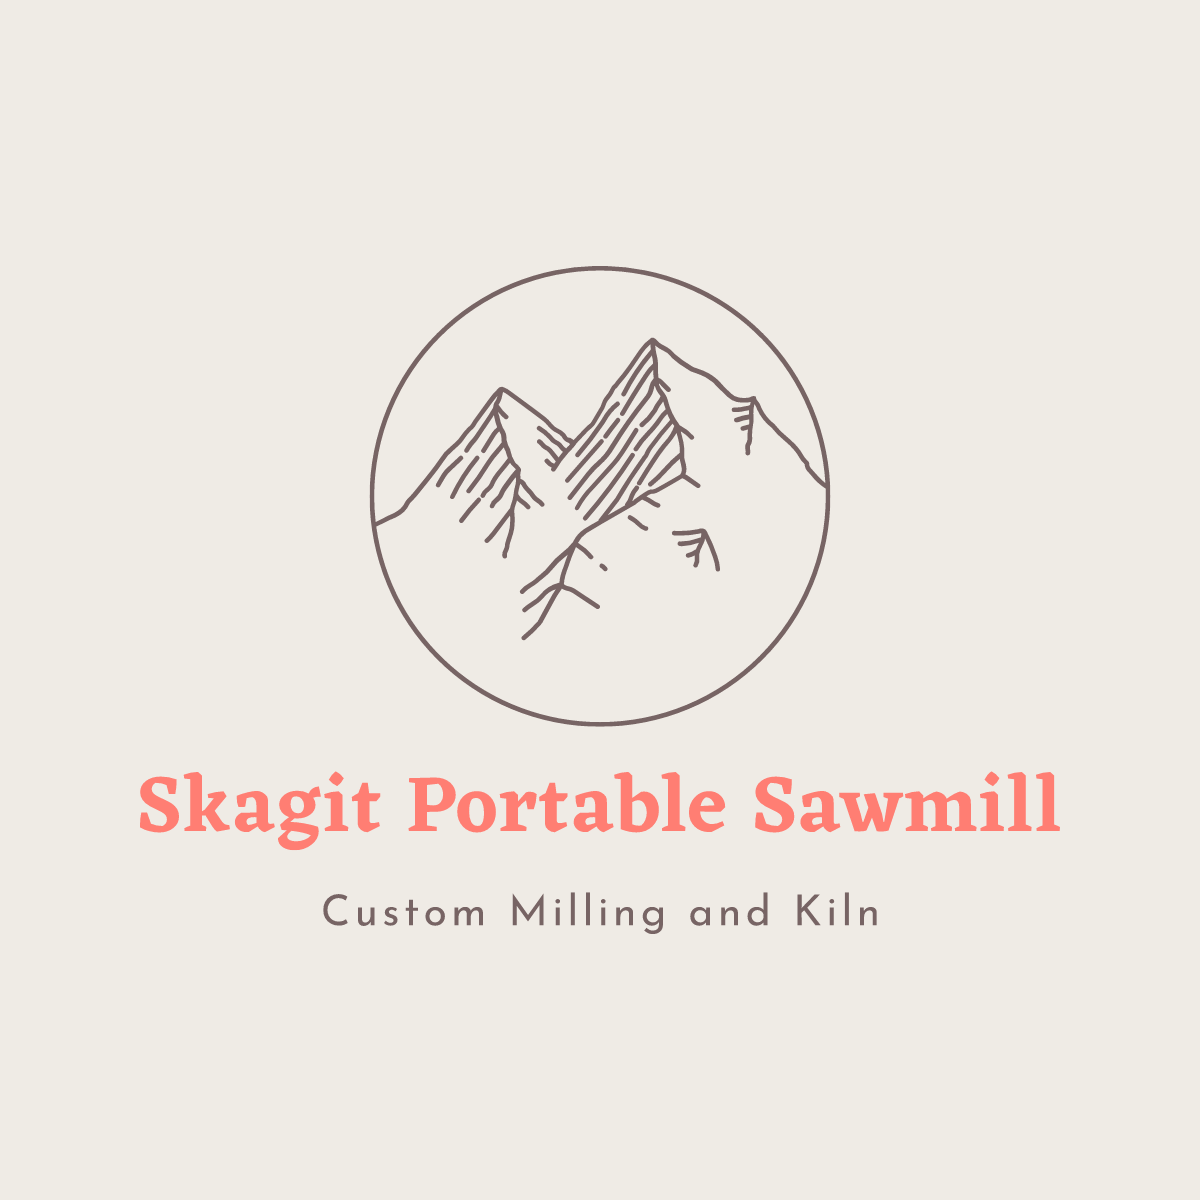 Skagit Portable Sawmill logo